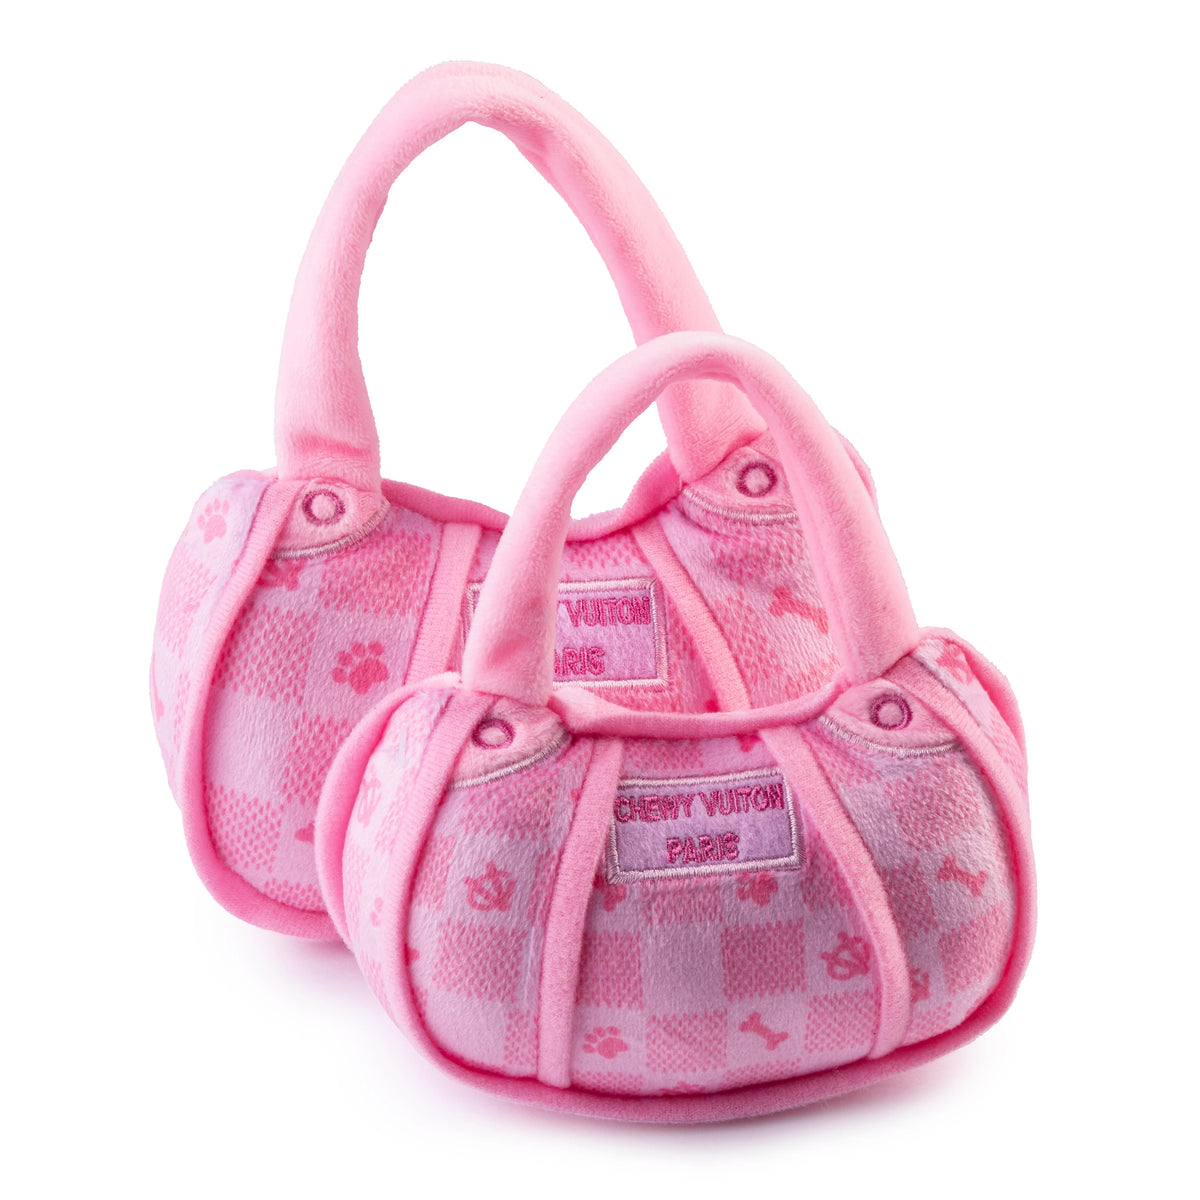 Haute Diggity Dog - Chewy Vuiton Handbag Pink Checker